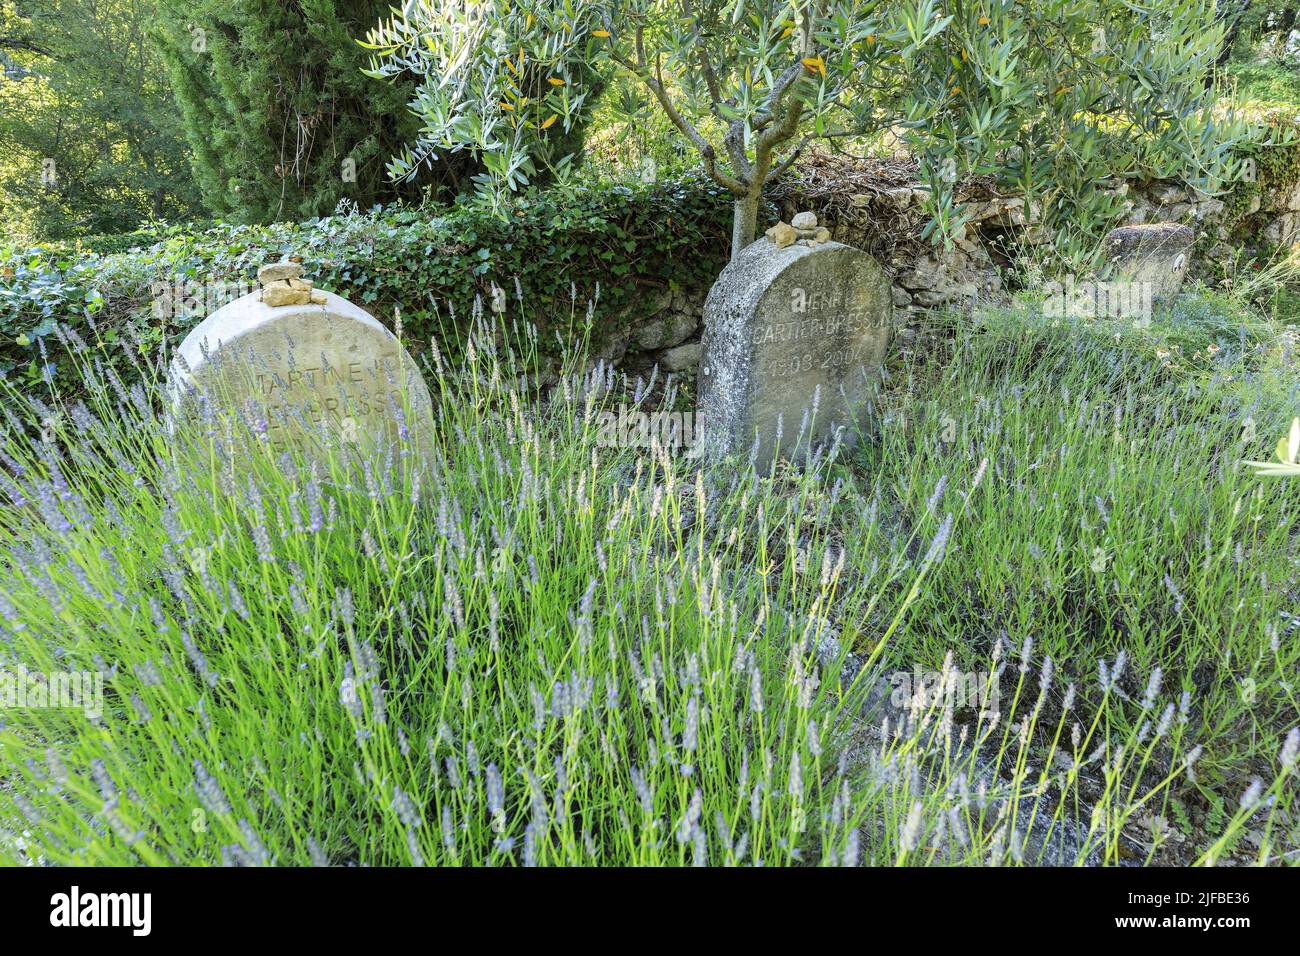 France, Alpes de Haute Provence, regional natural park of Luberon, Montjustin, cemetery, tomb of Henri Cartier Bresson photographer (1908 2004) Stock Photo